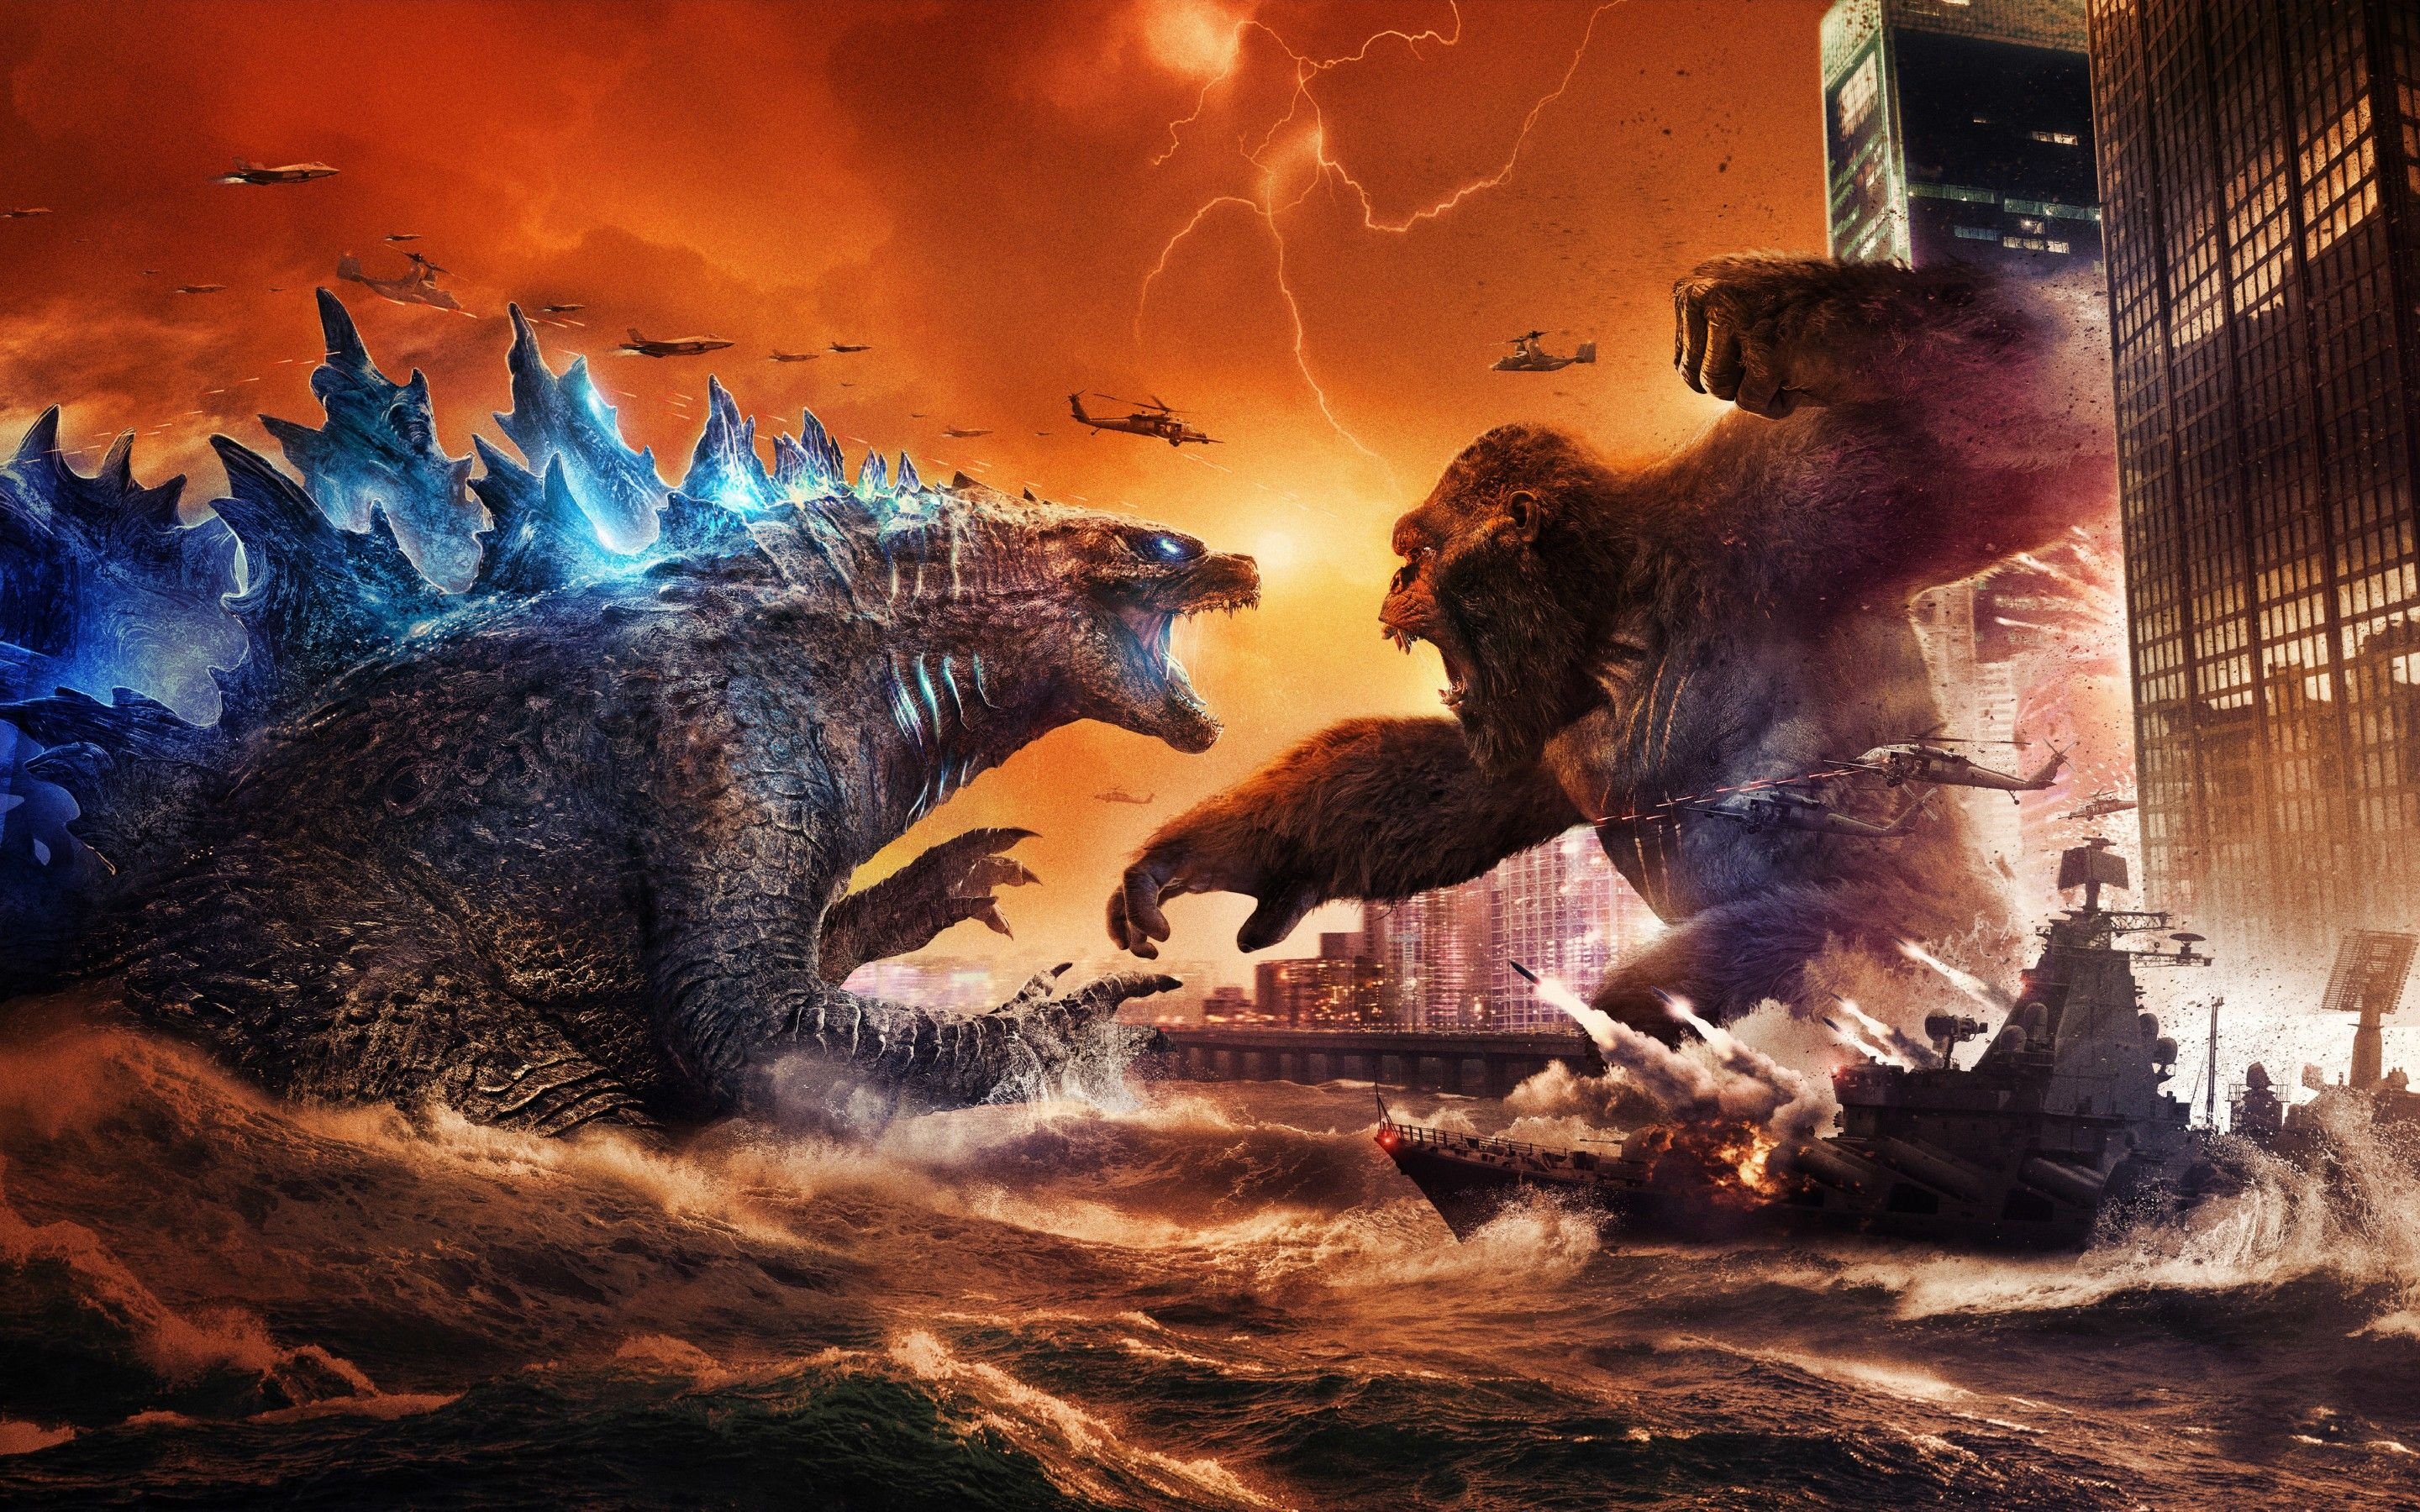 King Kong Vs Godzilla Wallpaper hd, picture, image